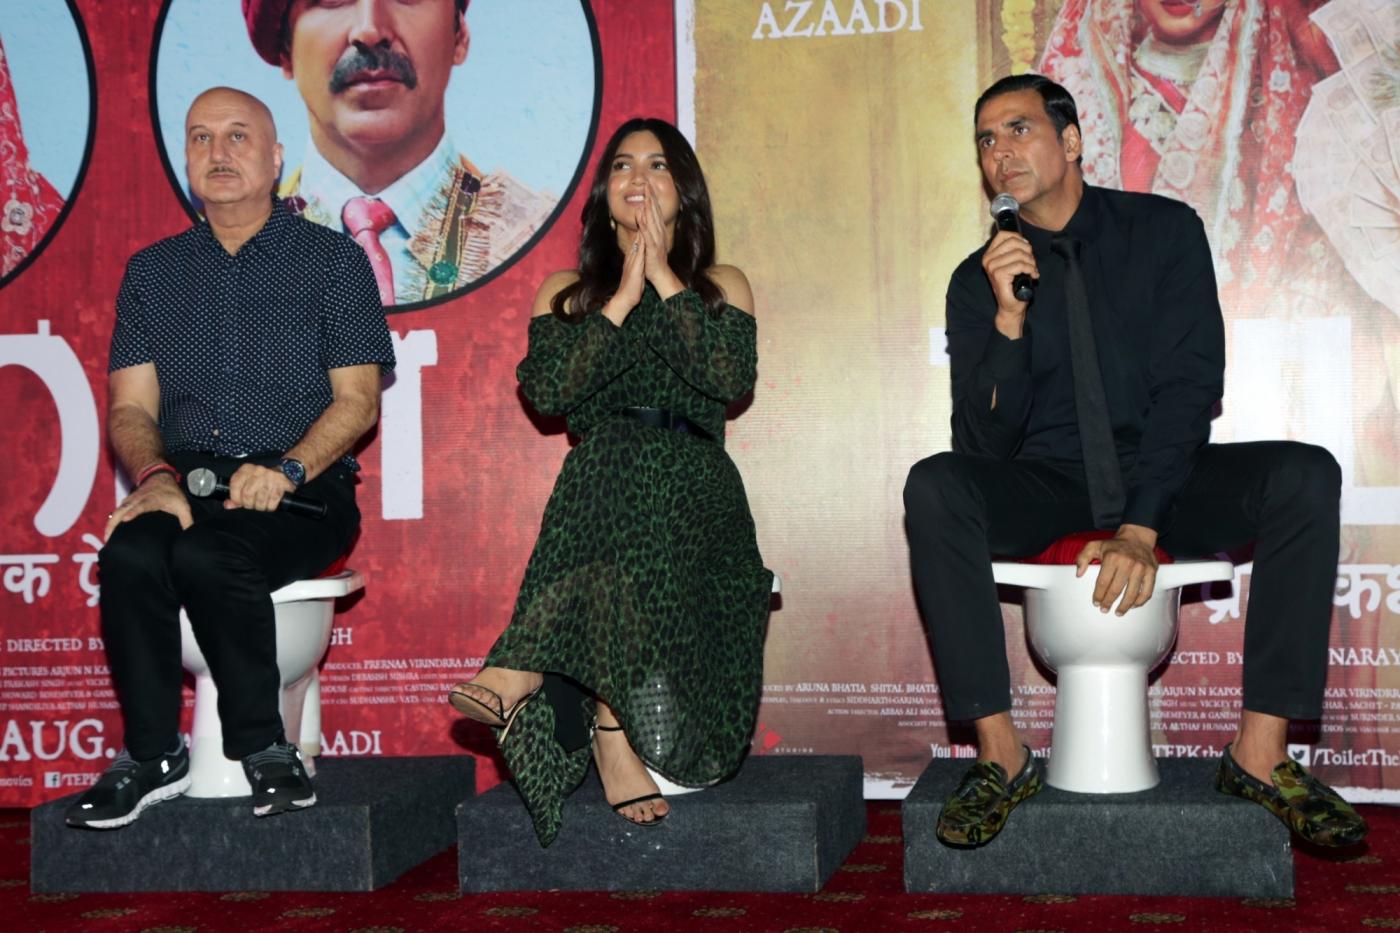 New Delhi: Actors Akshay Kumar, Bhumi Pednekar and Anupam Kher during a press conference regarding "Toilet: Ek Prem Katha" in New Delhi, on Aug 9, 2017. (Photo: Amlan Paliwal/IANS) by .